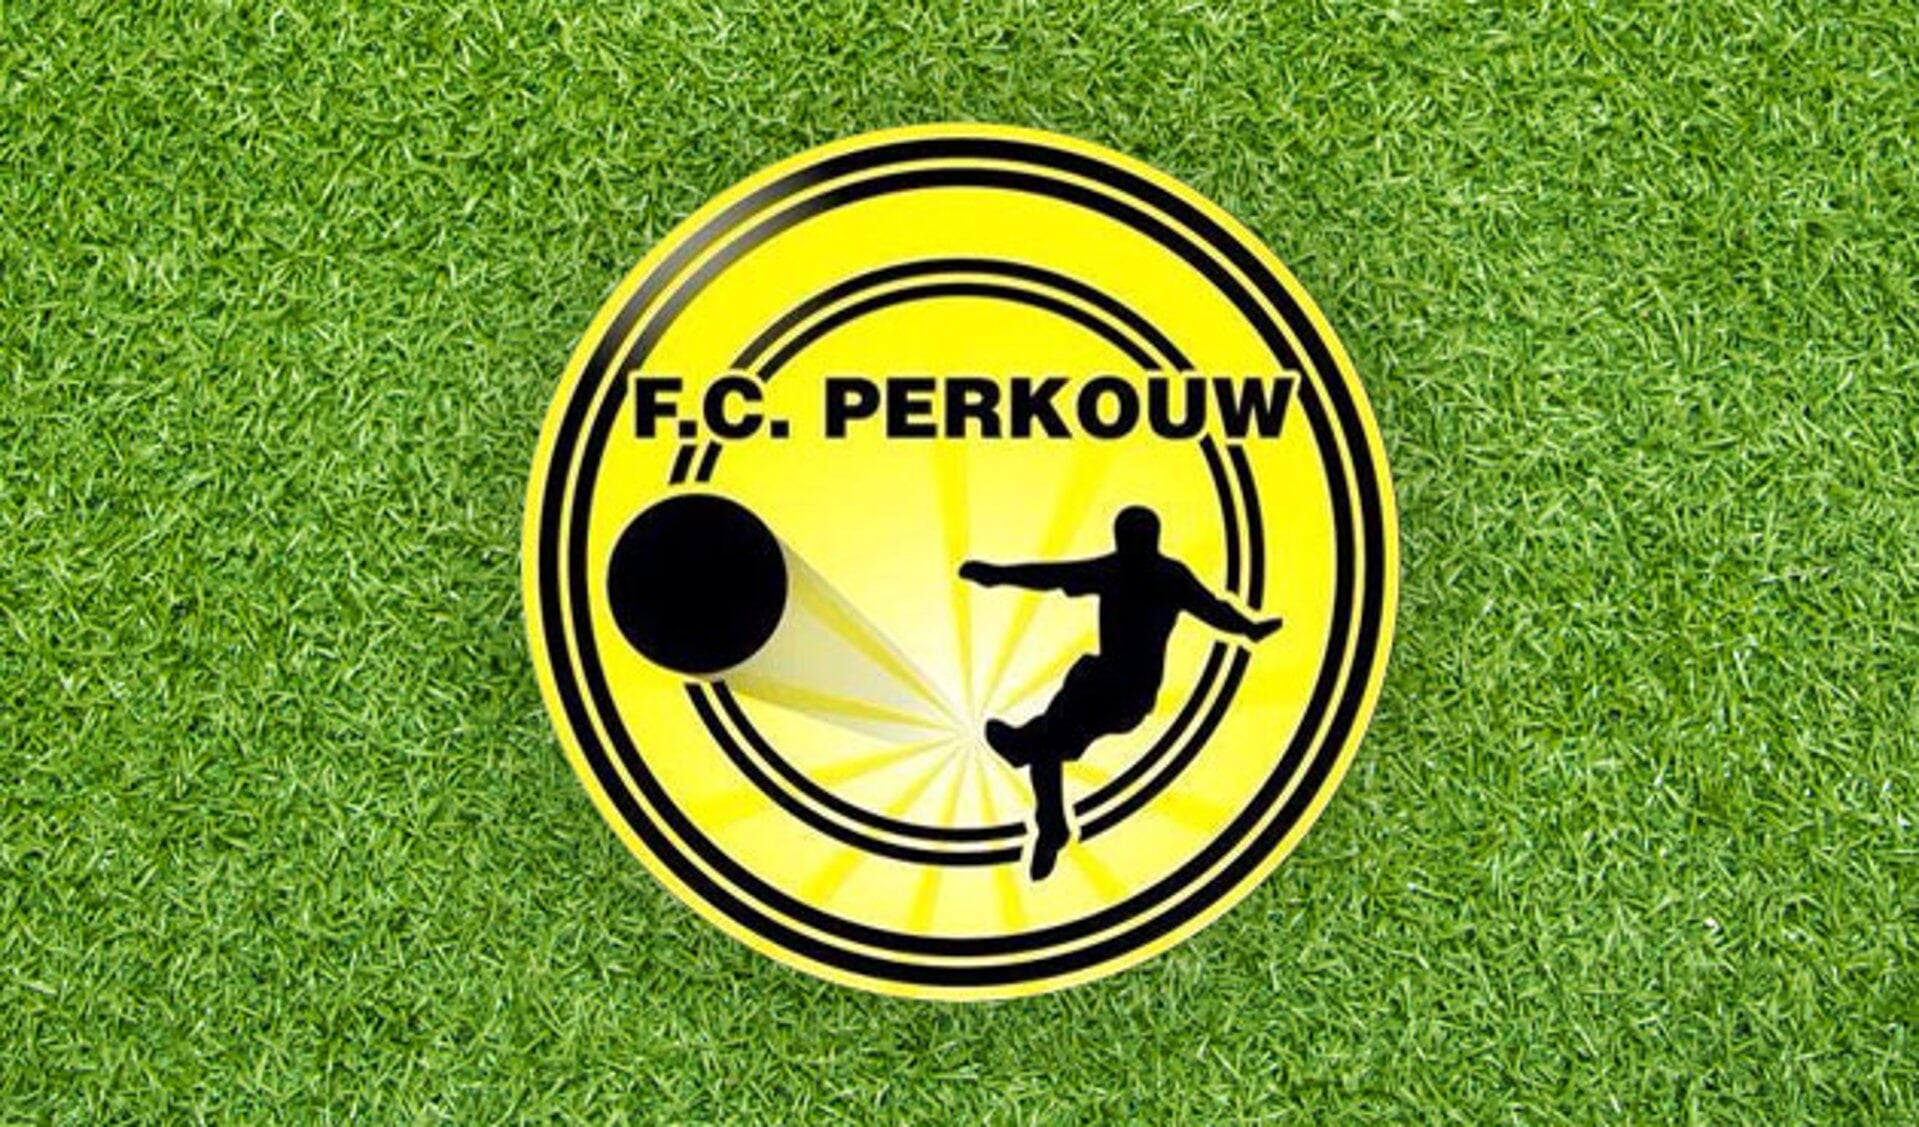 Mark Buijs per direct gestopt als trainer van FC Perkouw